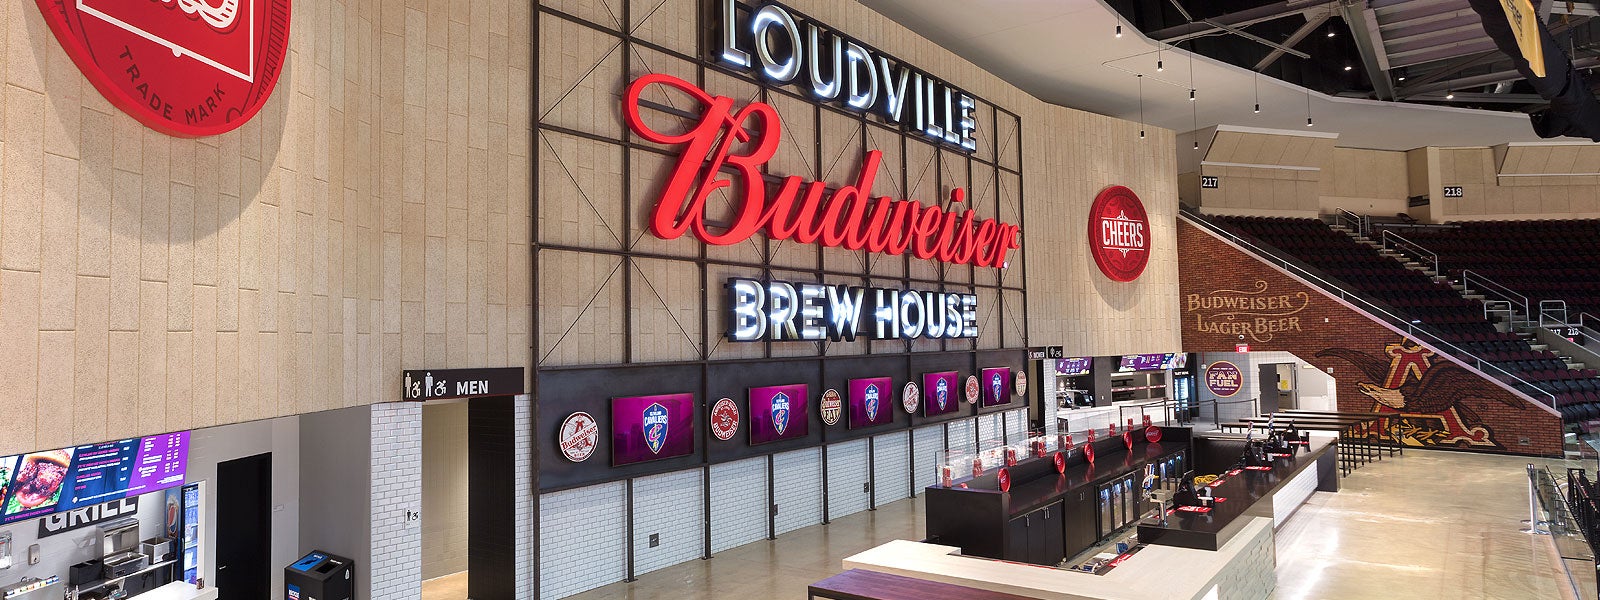 Loudville Budweiser Brew House